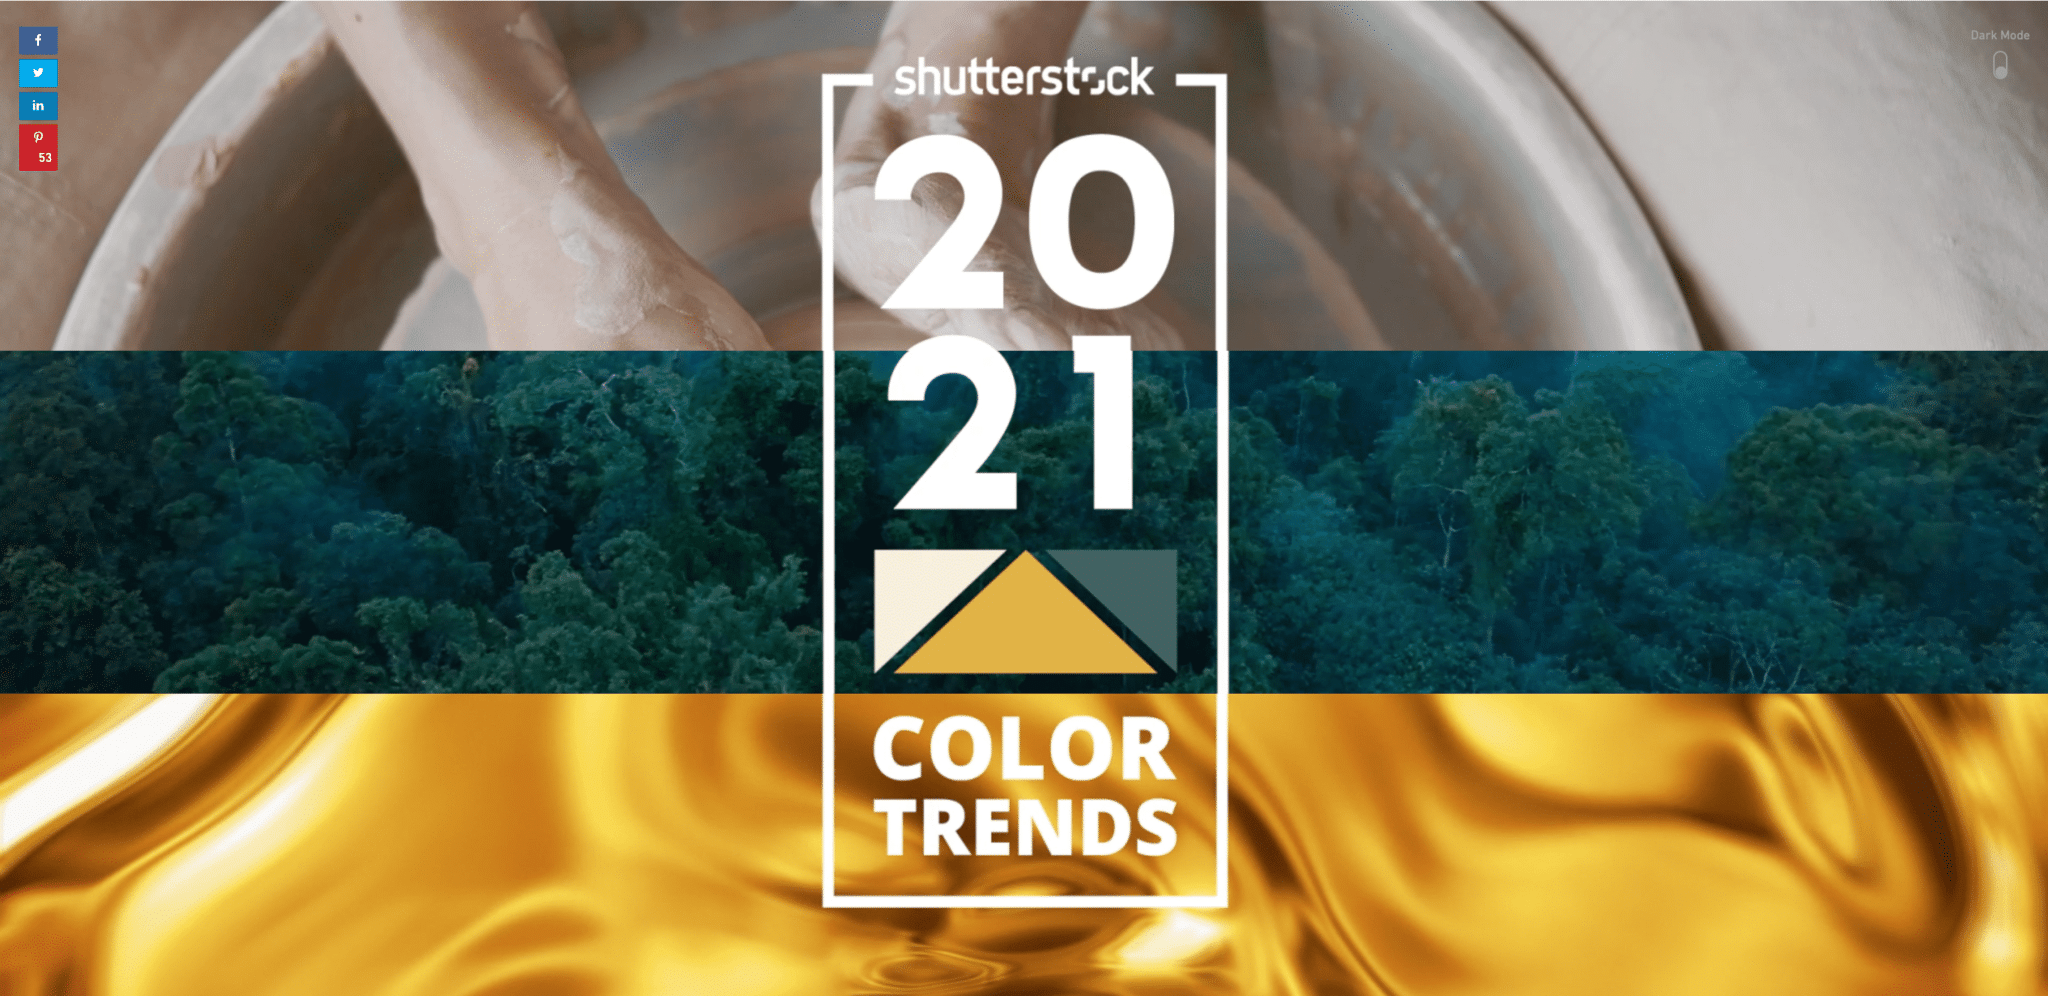 2021 Color Trends – เทรนด์สีปี 2564 จาก Shutterstock